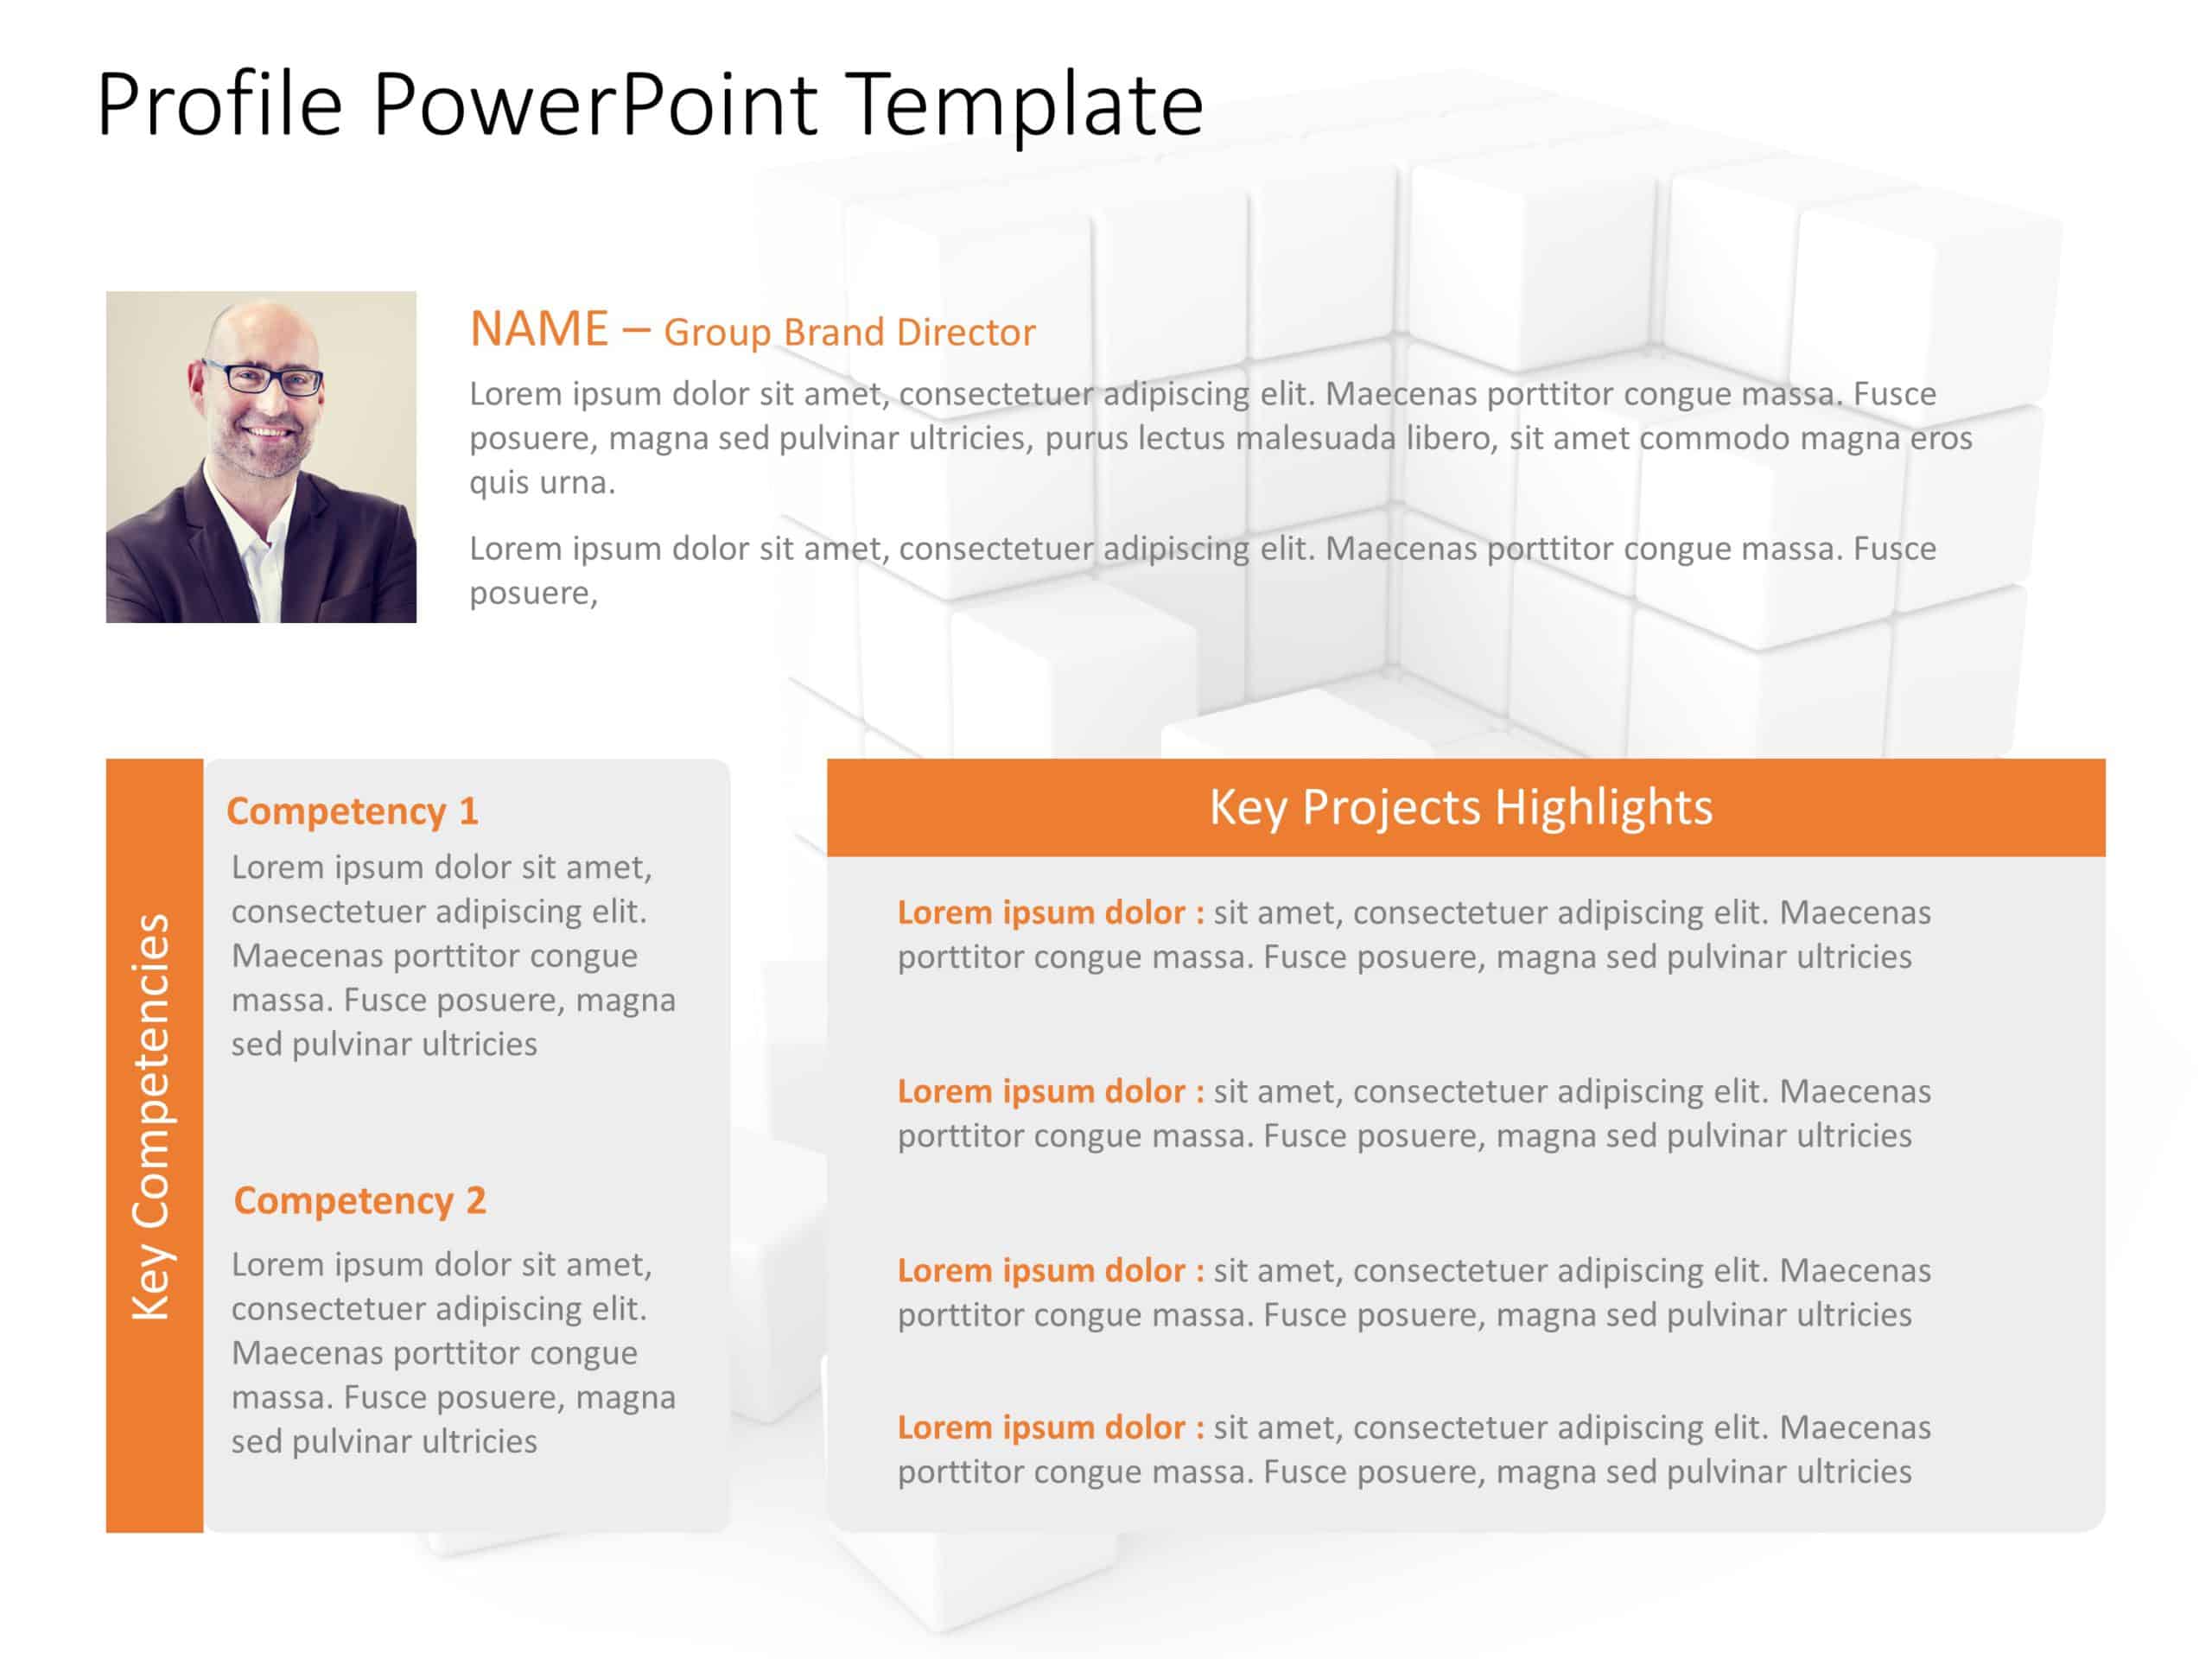 Employee Profile 6 PowerPoint Template